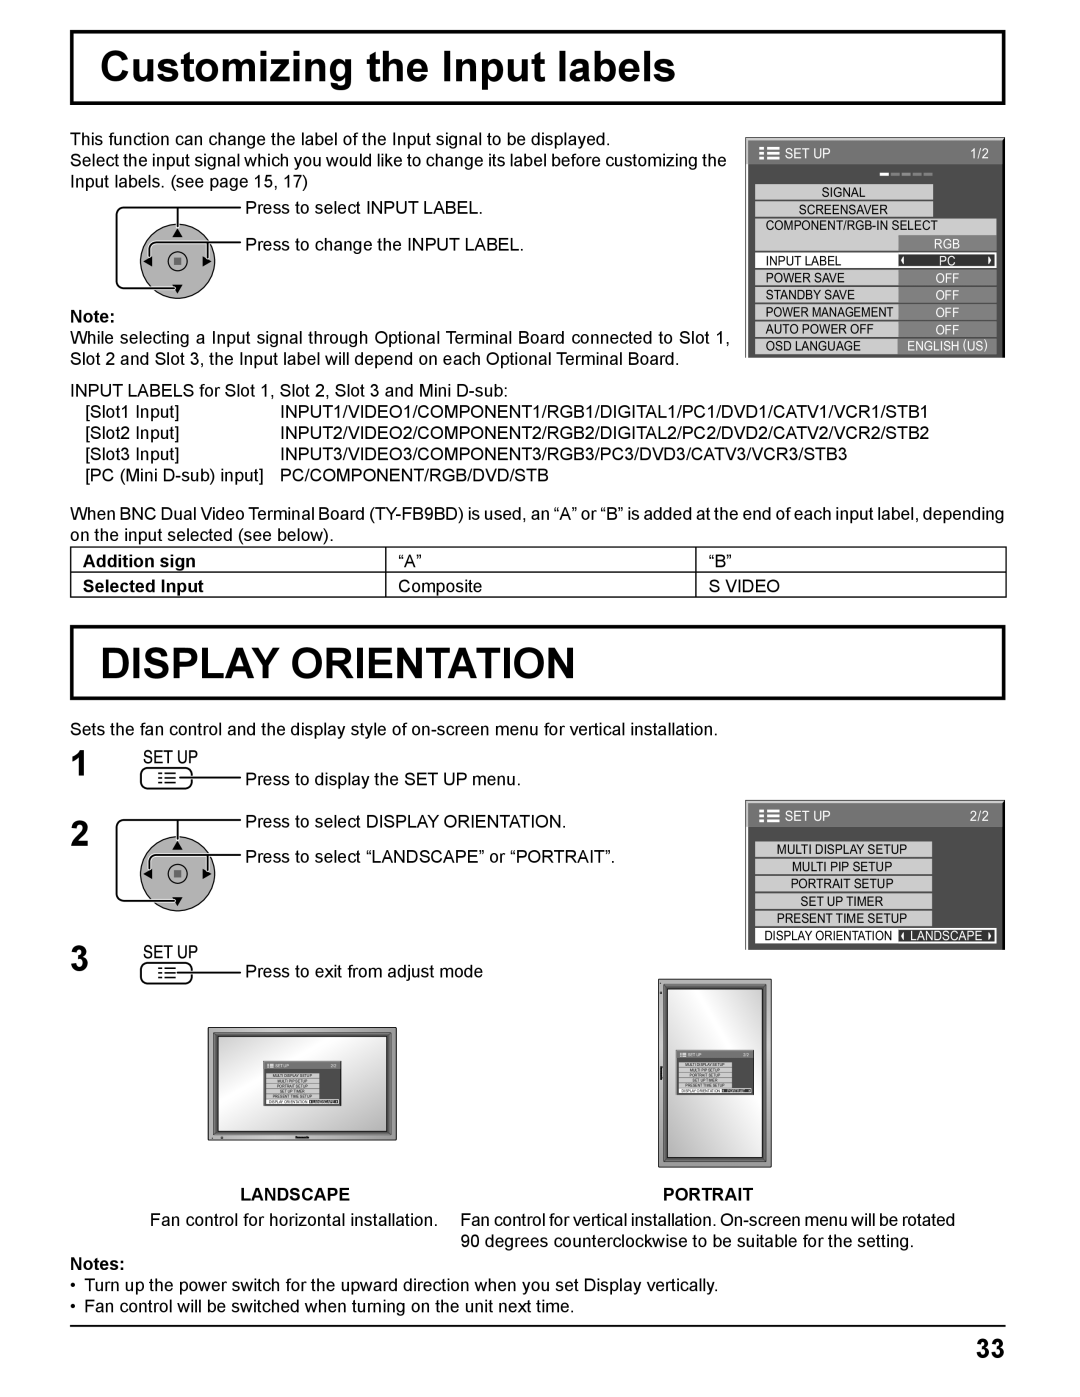 Panasonic TH-58PF11UK manual Customizing the Input labels, Display Orientation, Addition sign, Selected Input, Landscape 